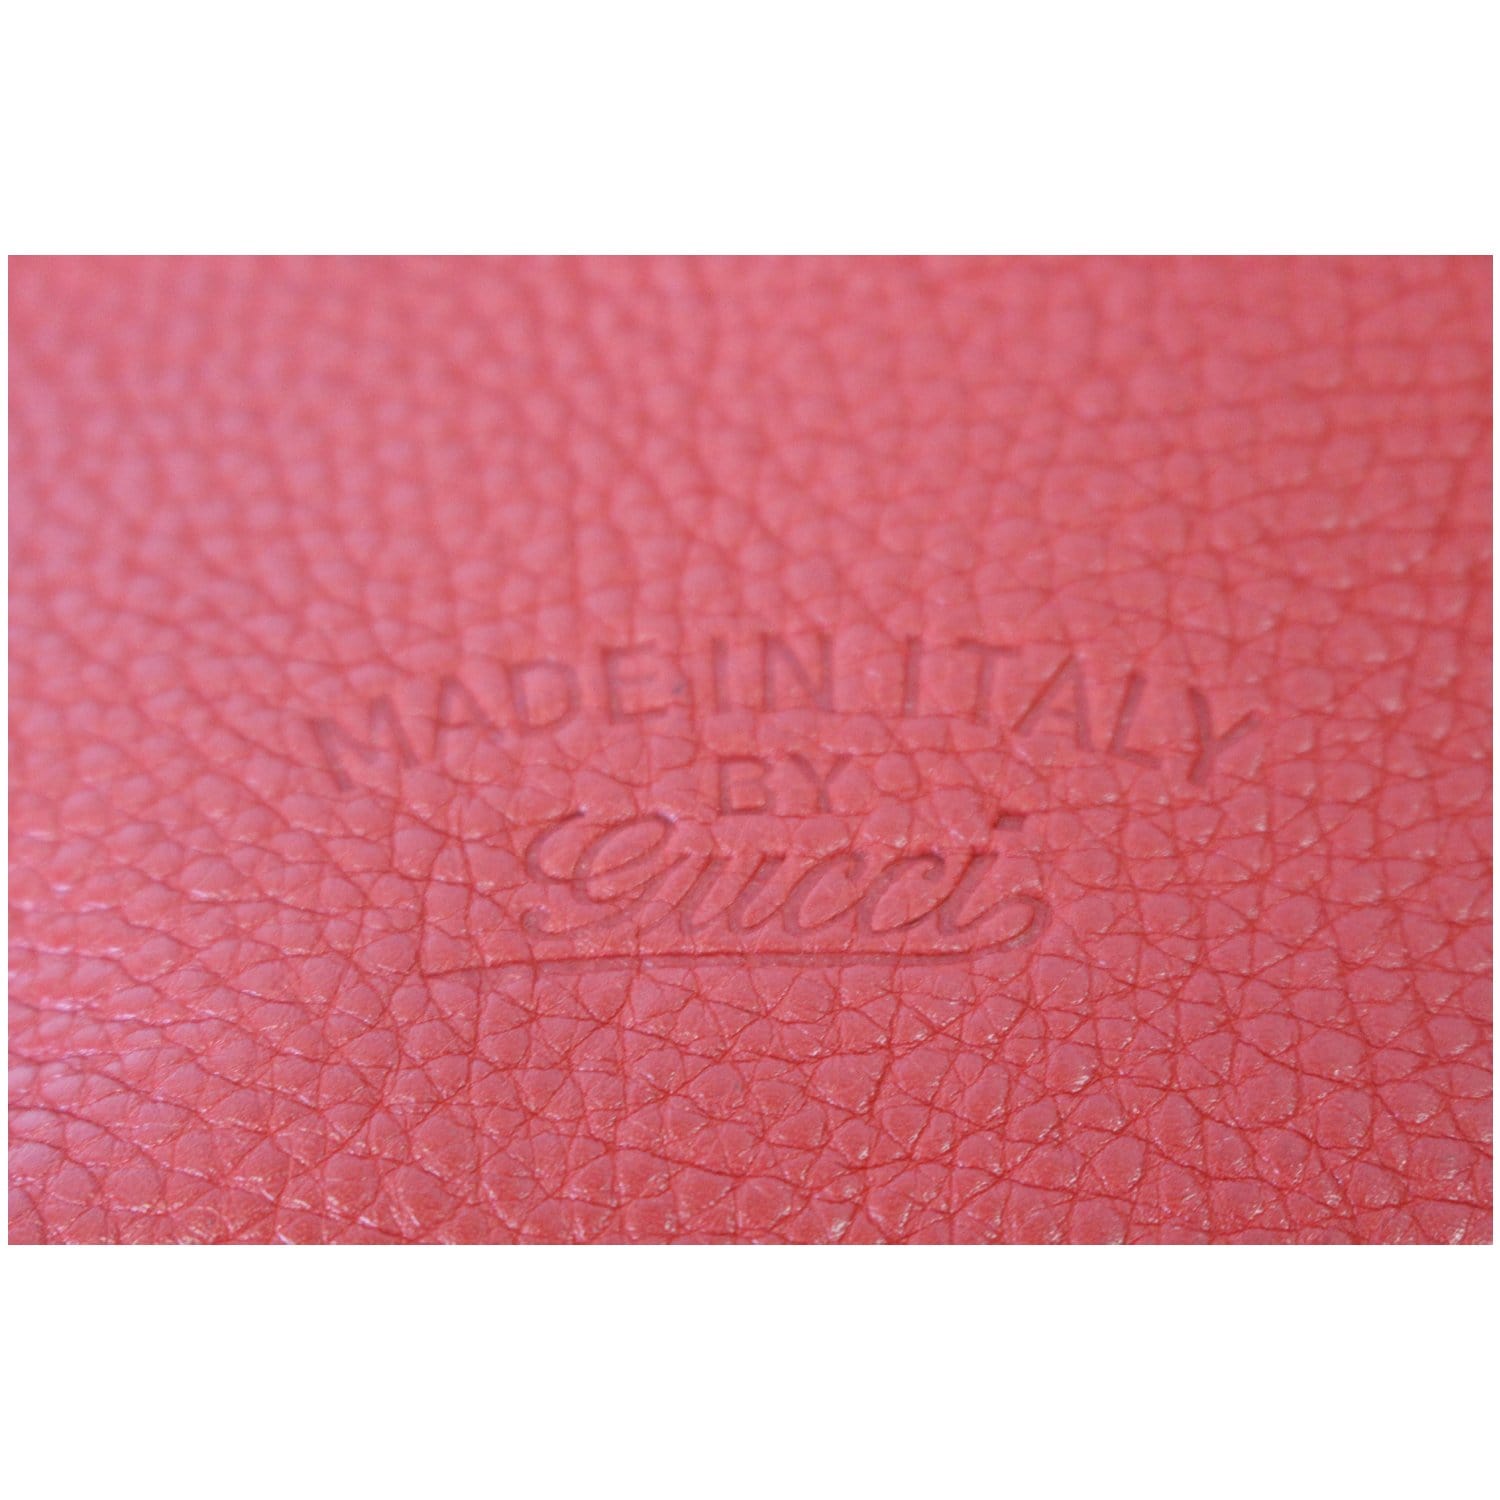 GUCCI Lady Tassel Bucket Leather Shoulder Bag Red 354472